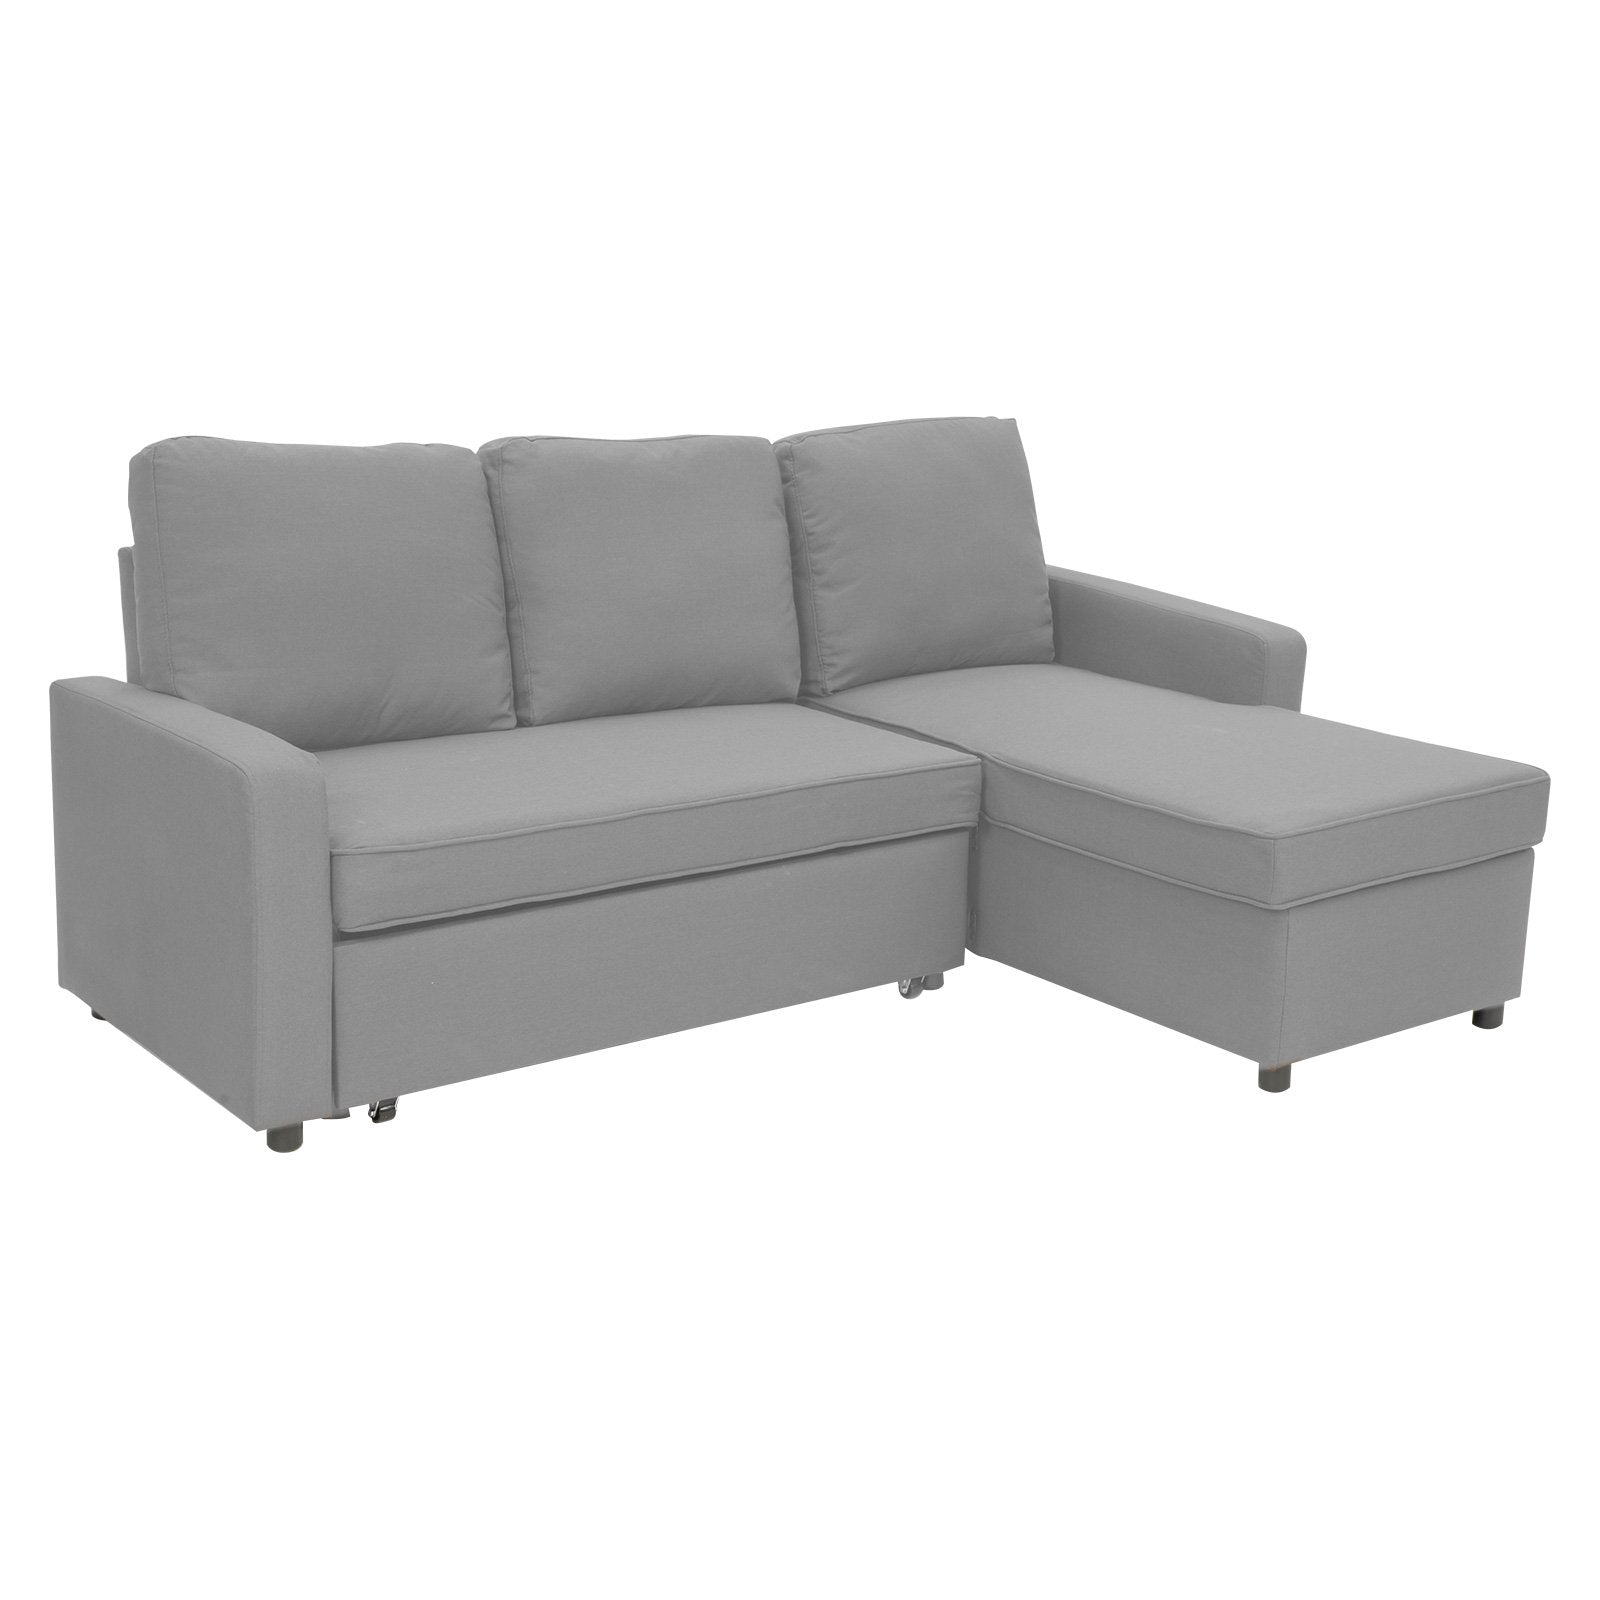 Sarantino 3-Seater Corner Sofa Bed | Storage Lounge Chaise | Light Grey